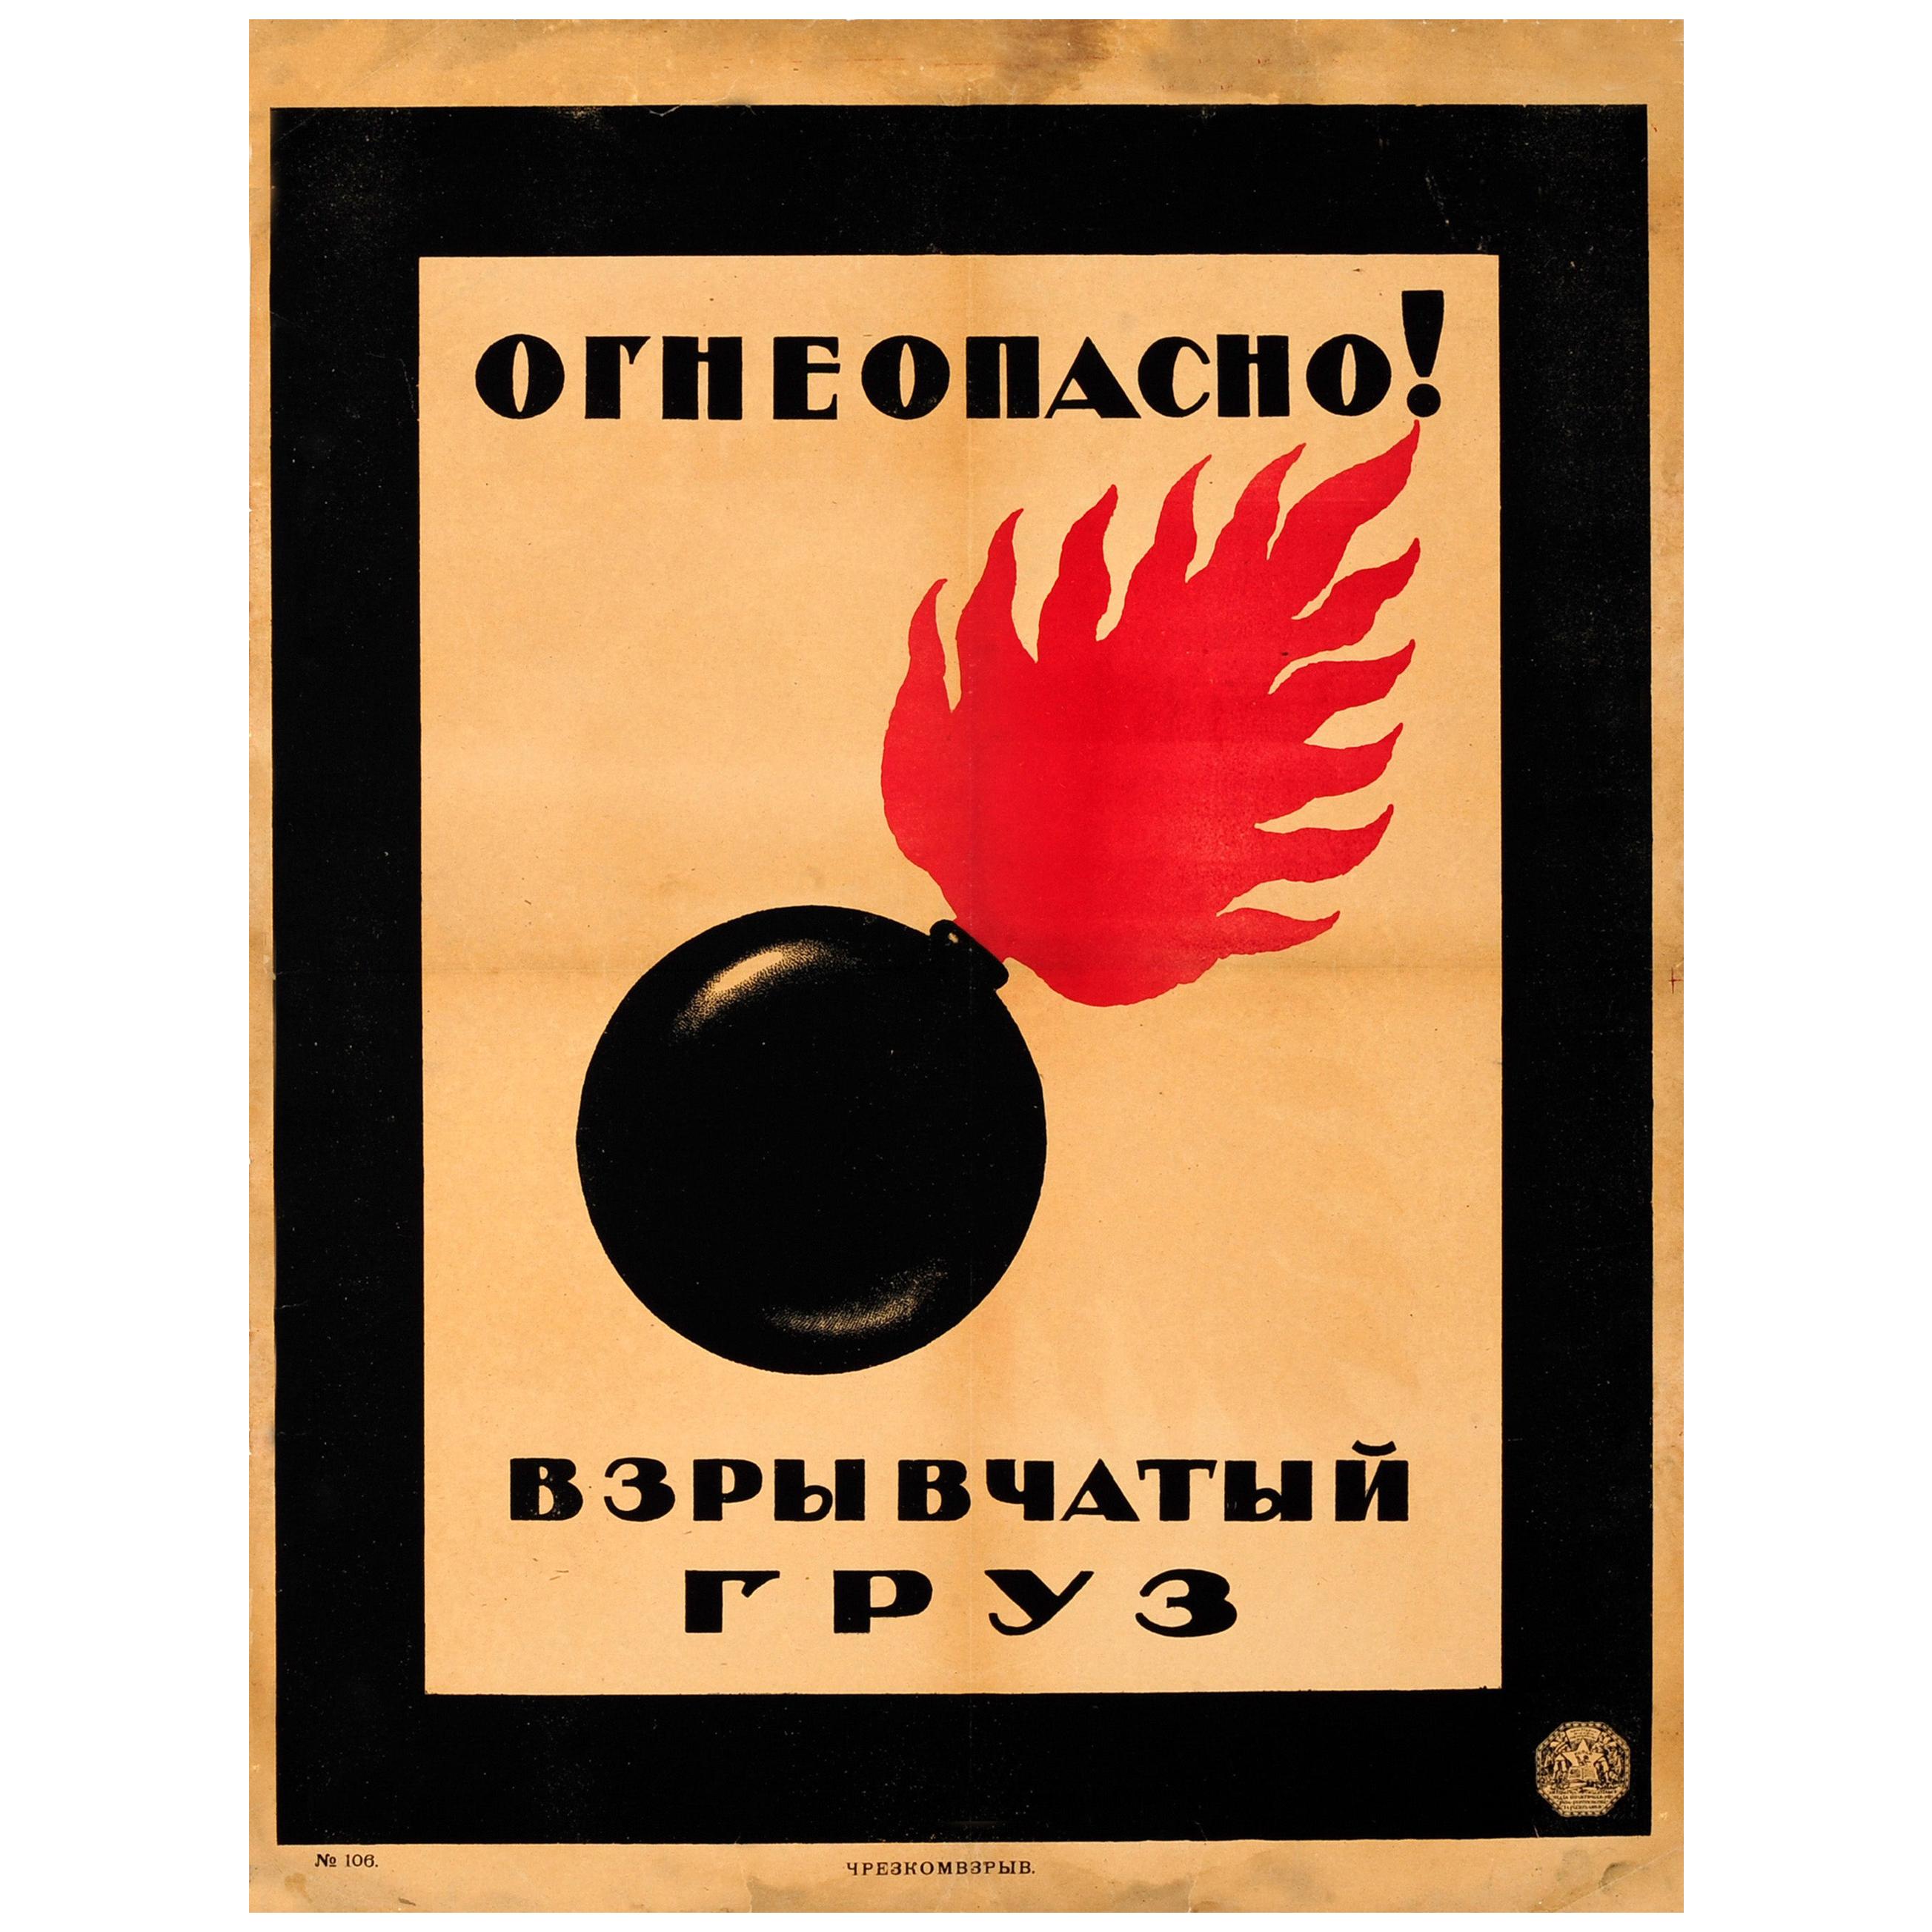 Original Vintage Soviet Transport Safety Poster Fire Hazard Explosive Cargo Bomb